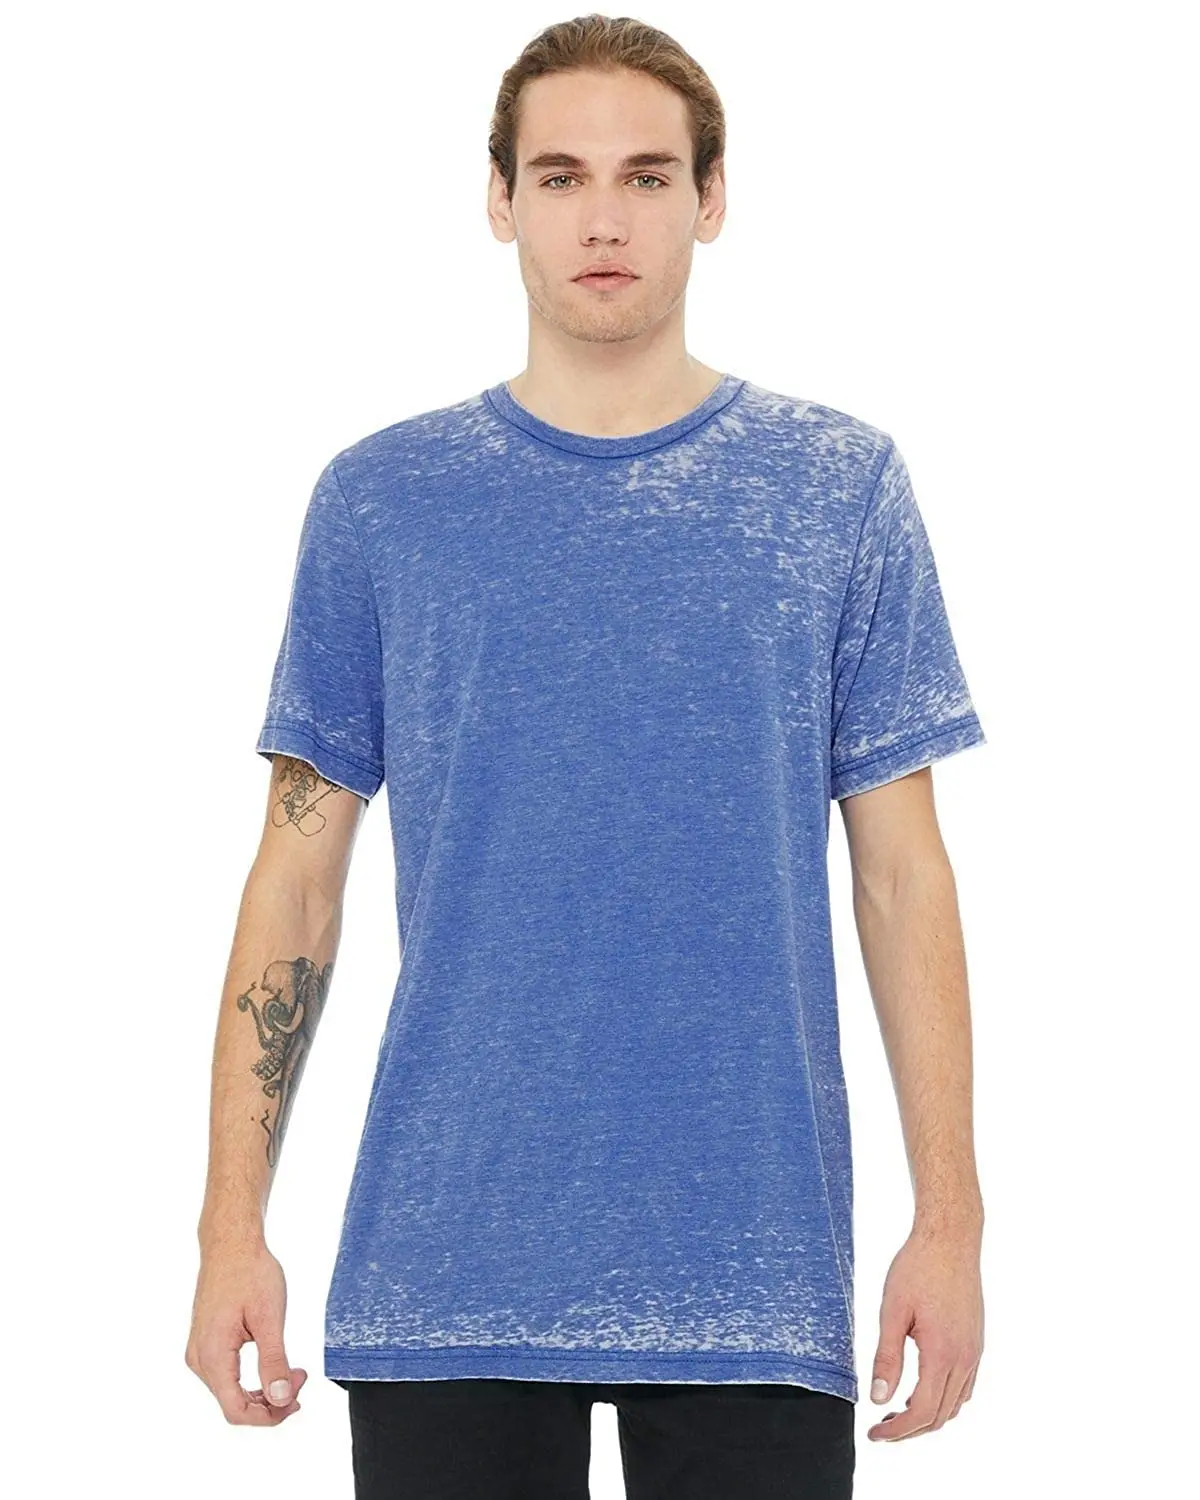 New Reflective Design Men wholesale t shirt Plain Custom New Design 100% cotton t shirt Low MOQ